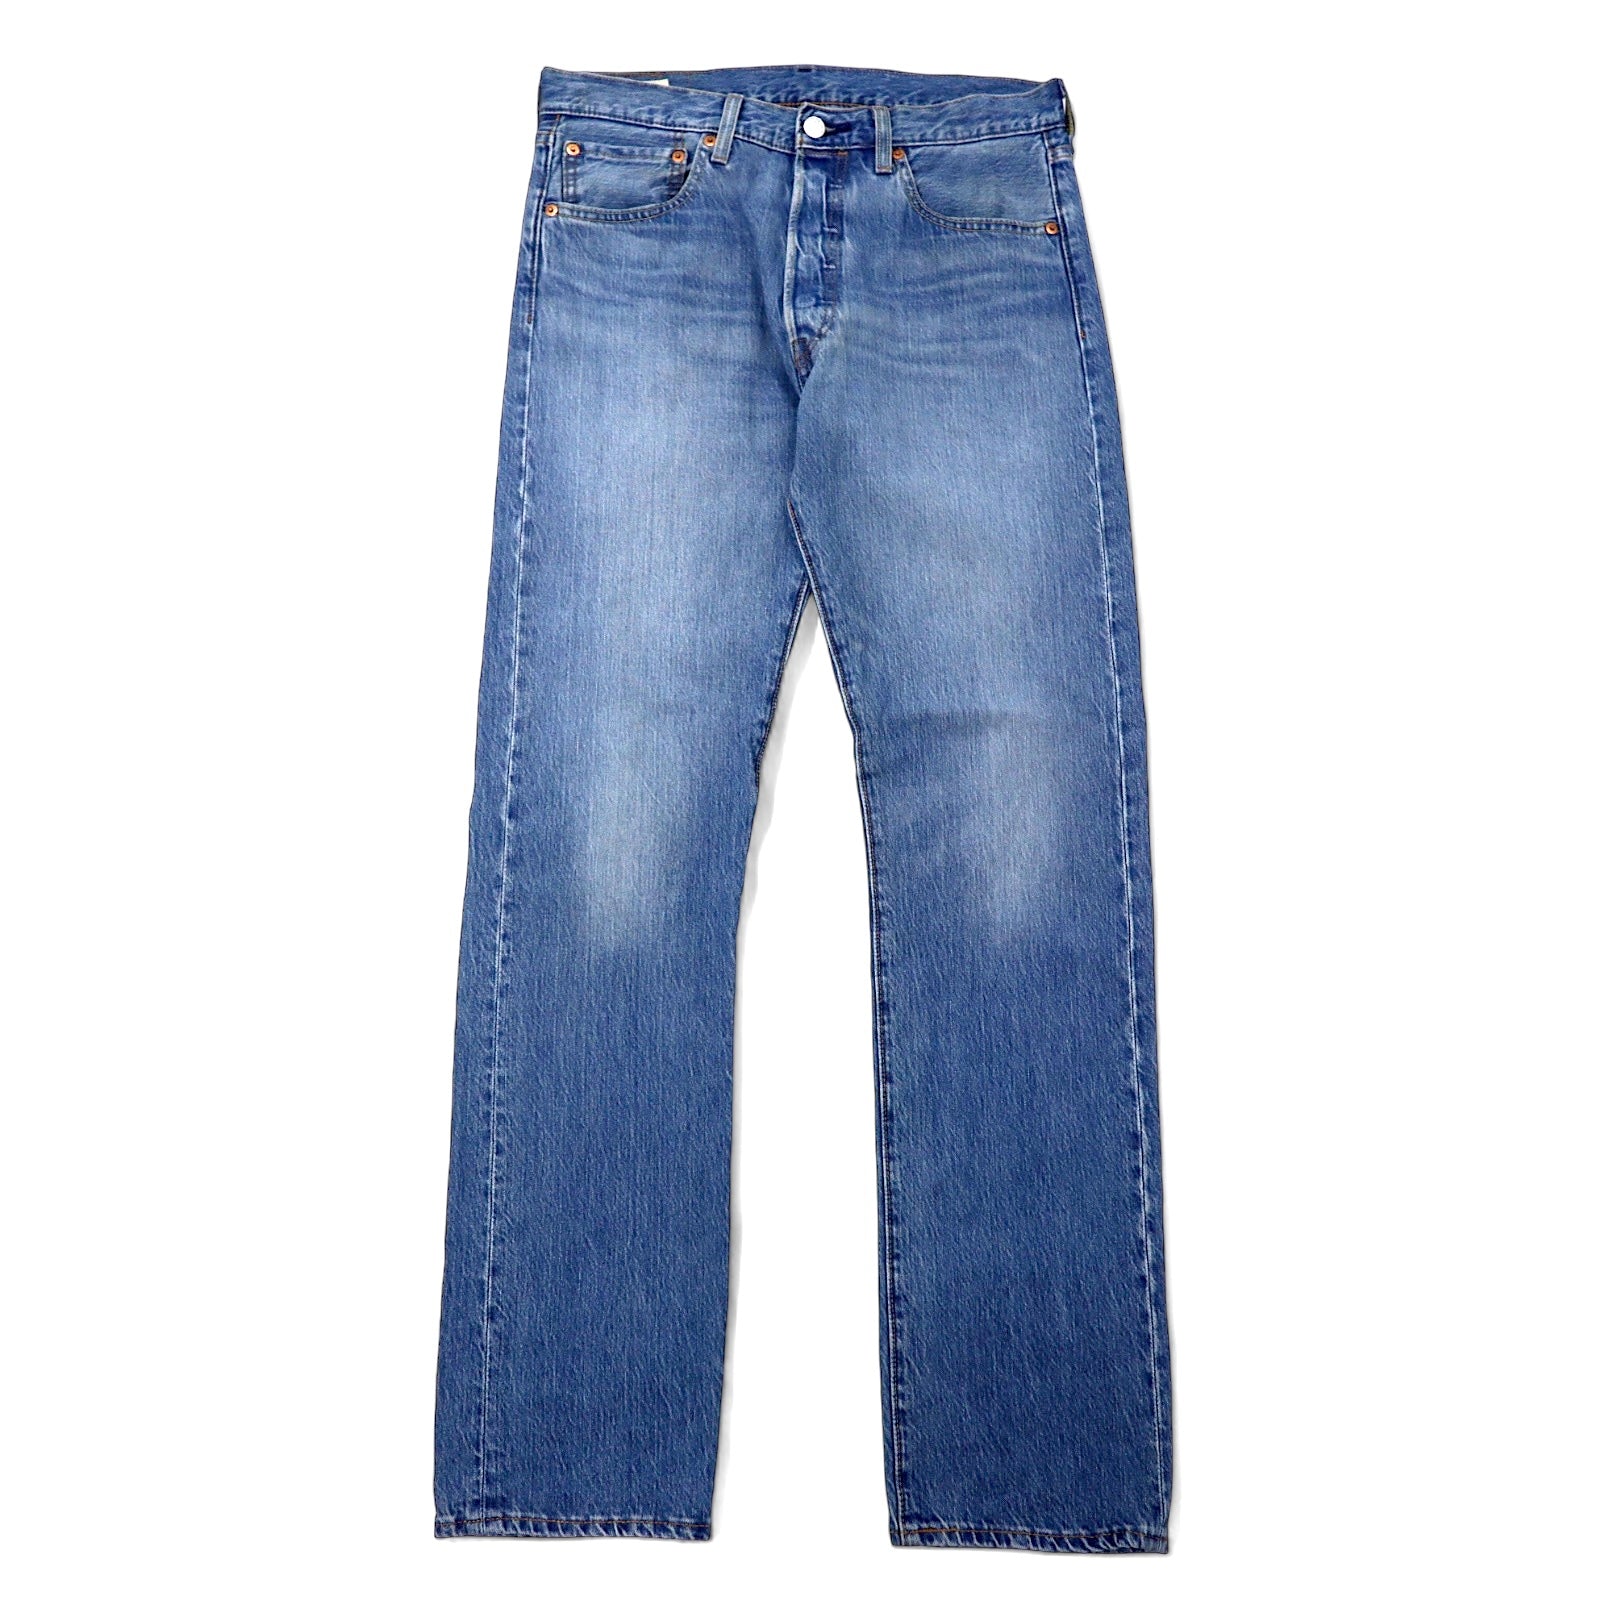 LEVI'S PREMIUM ビッグE 501 デニムパンツ 31 ブルー コットン レザーパッチ ボタンフライ Pipe Light Blue Denim Jeans 00501-2743